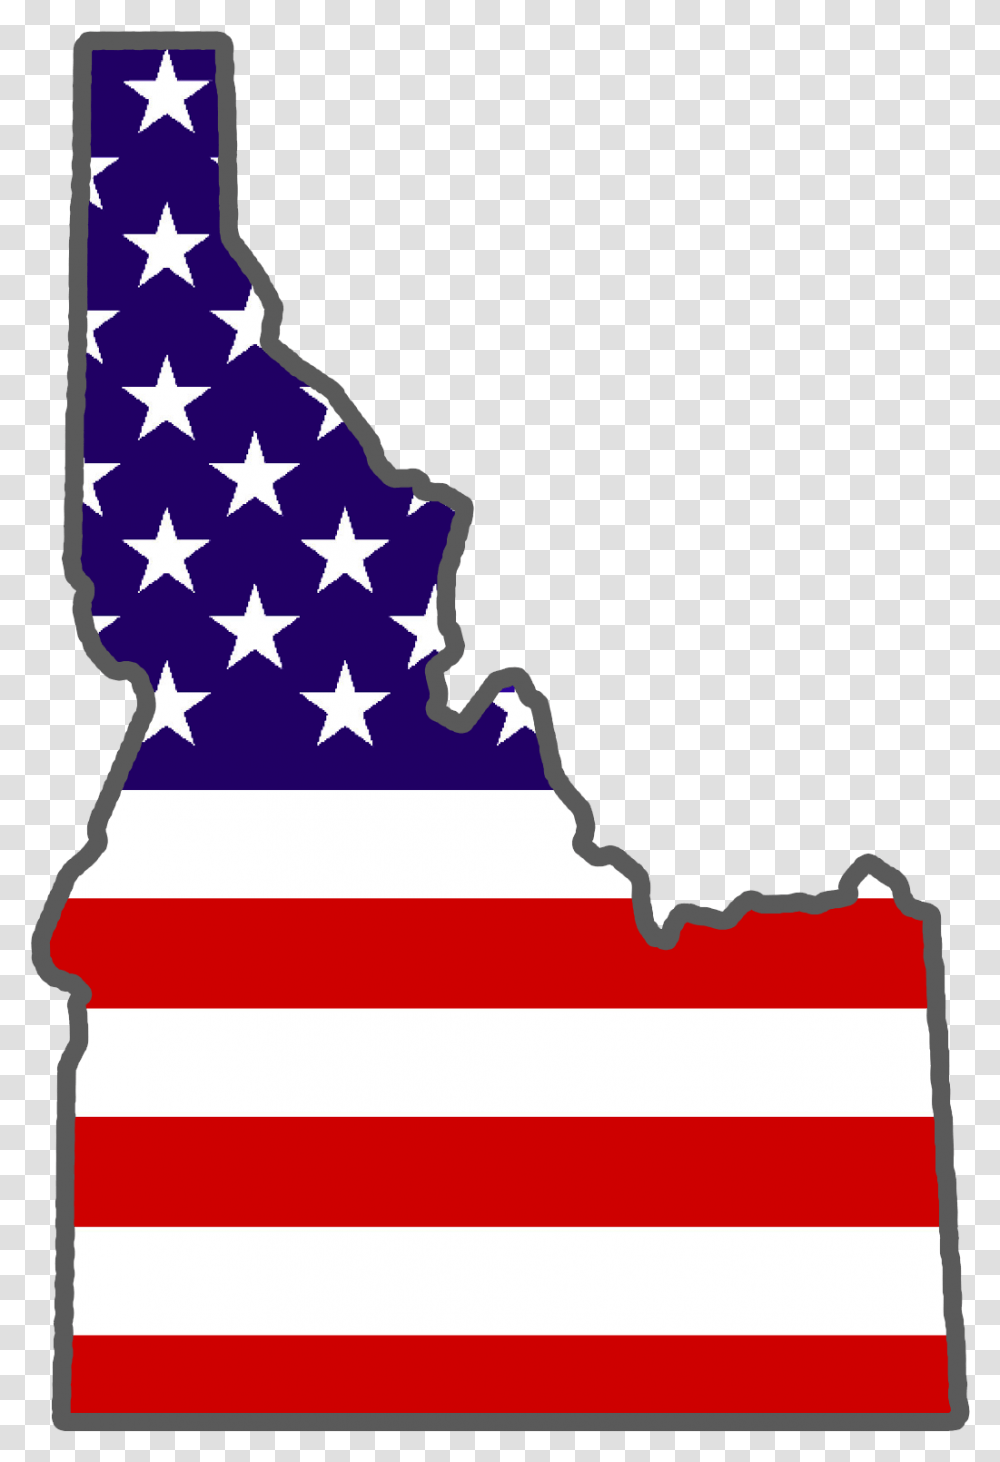 Agario Skin Obama Cartoons Iphone Home Button Sticker Flipkart, Flag, American Flag, Star Symbol Transparent Png